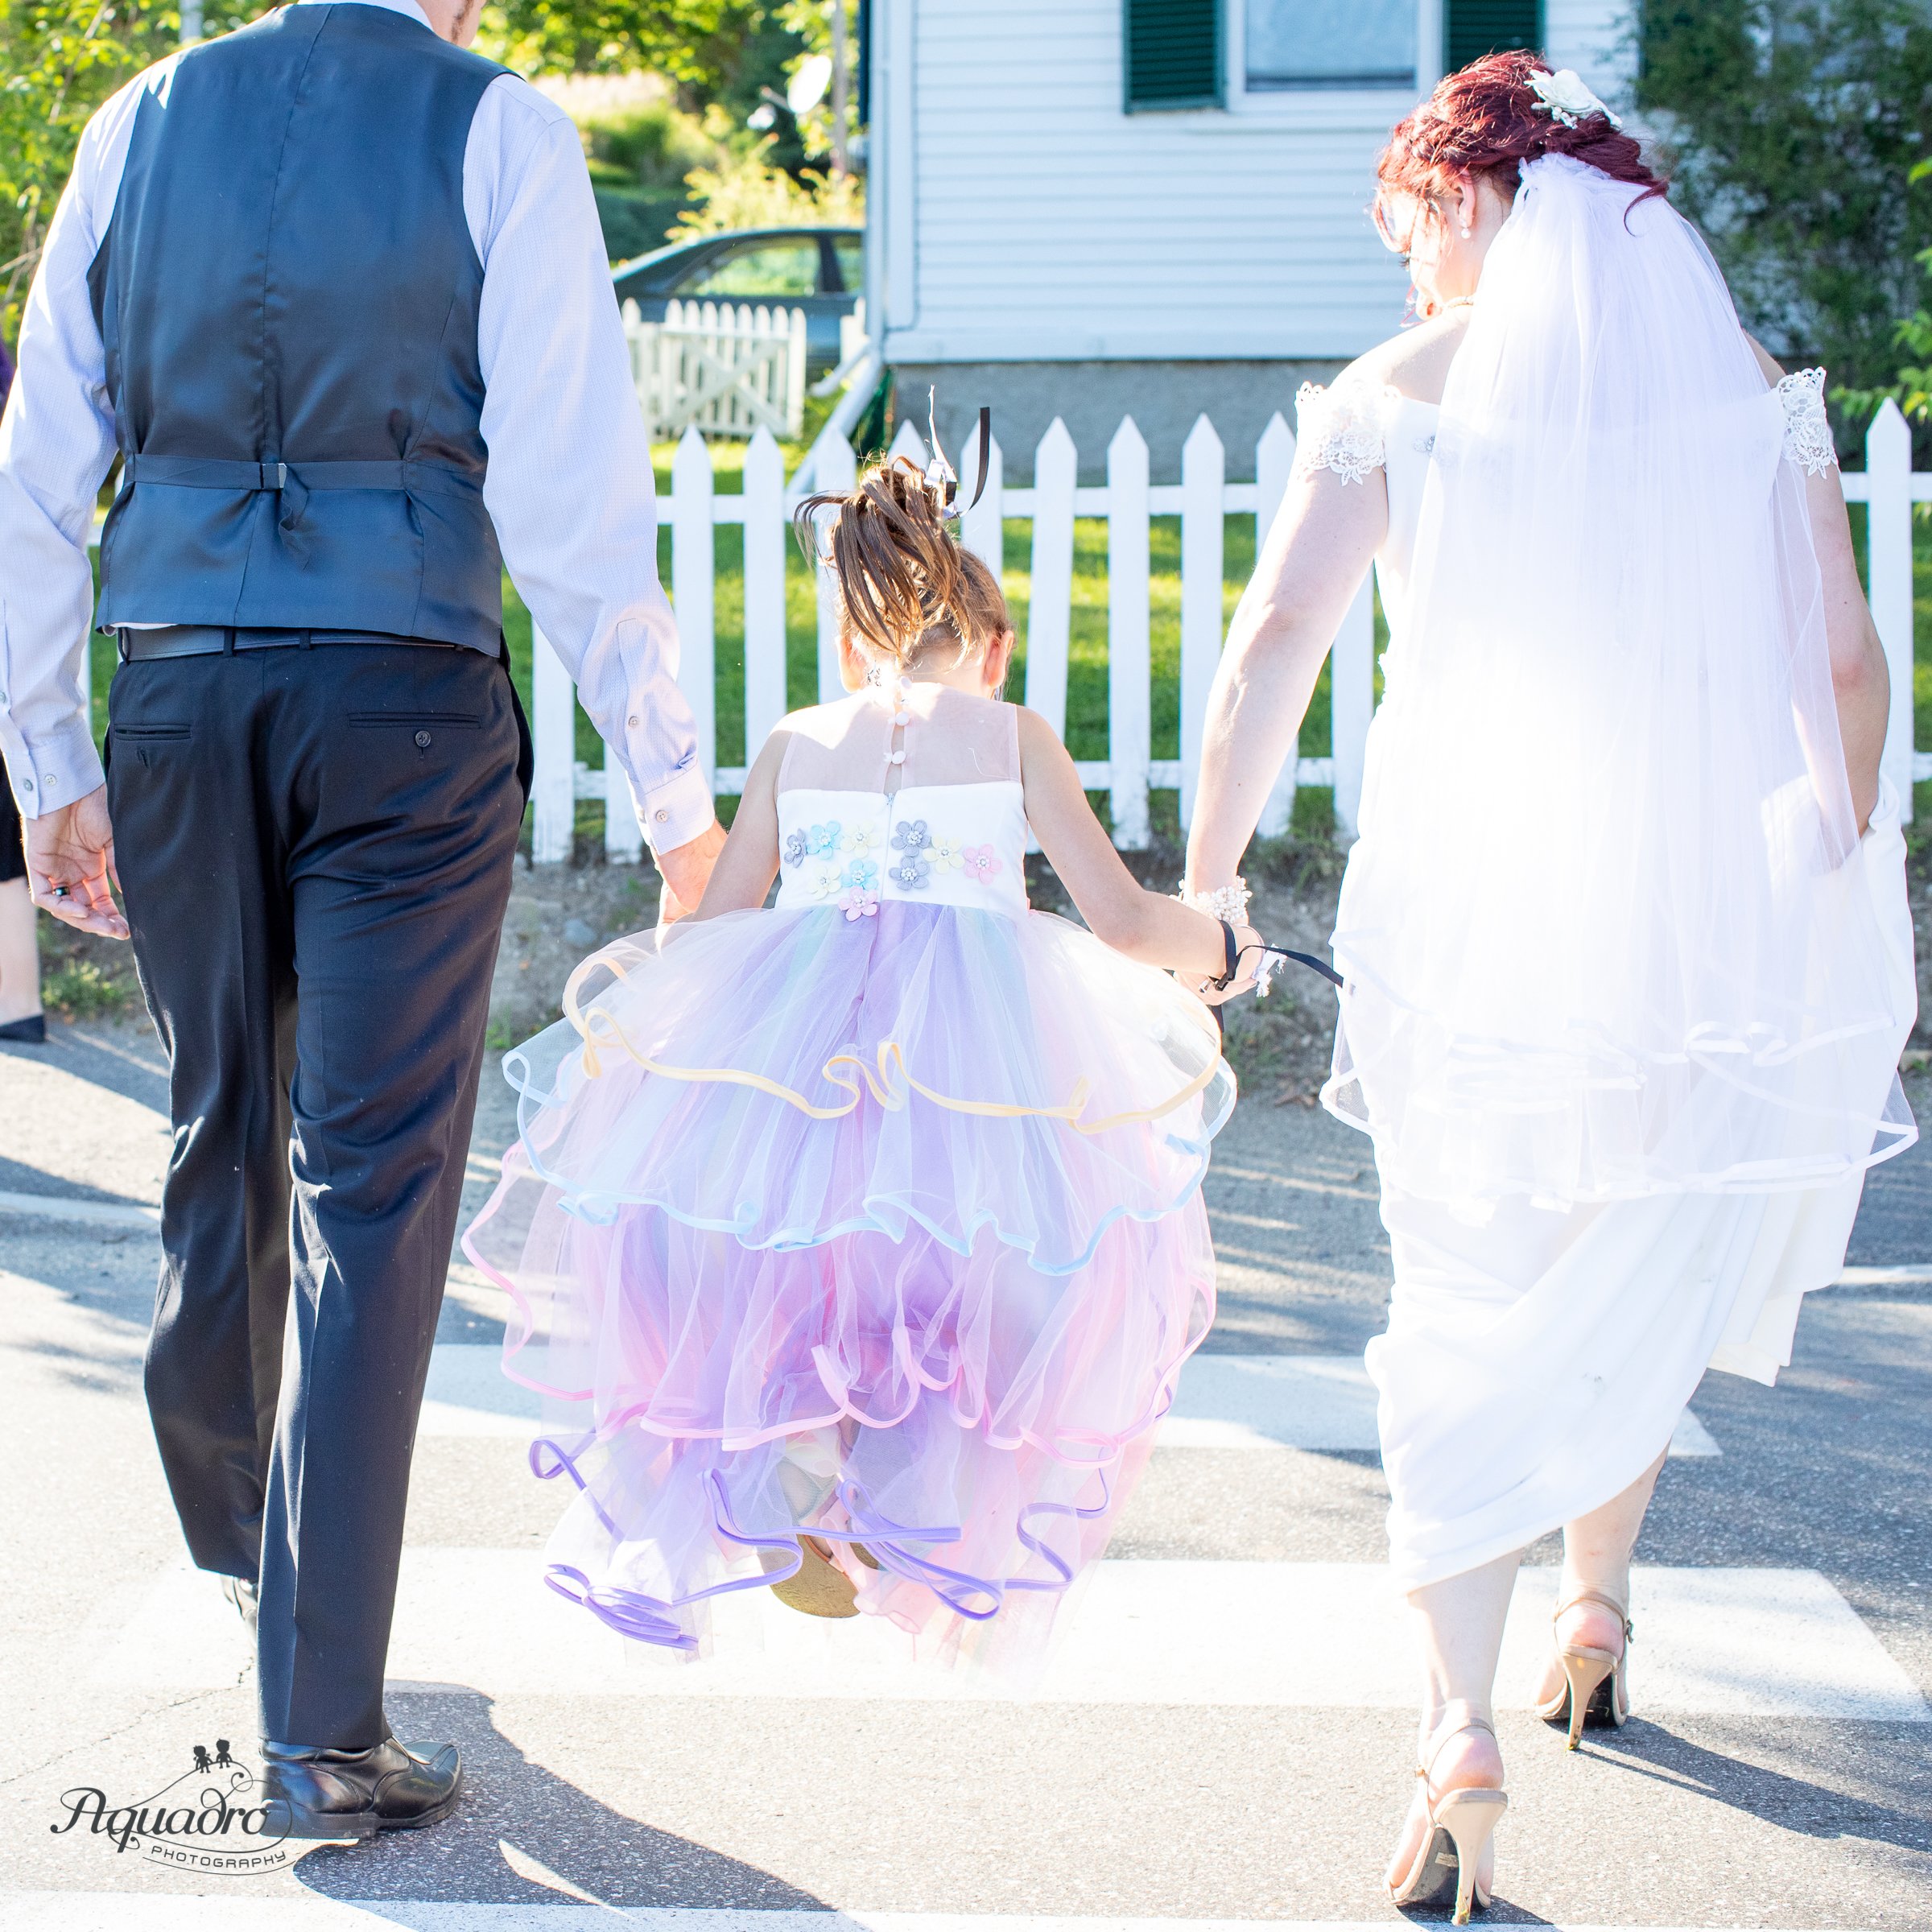 A Small Wedding at the Somesville Bridge on Mount Desert Island,